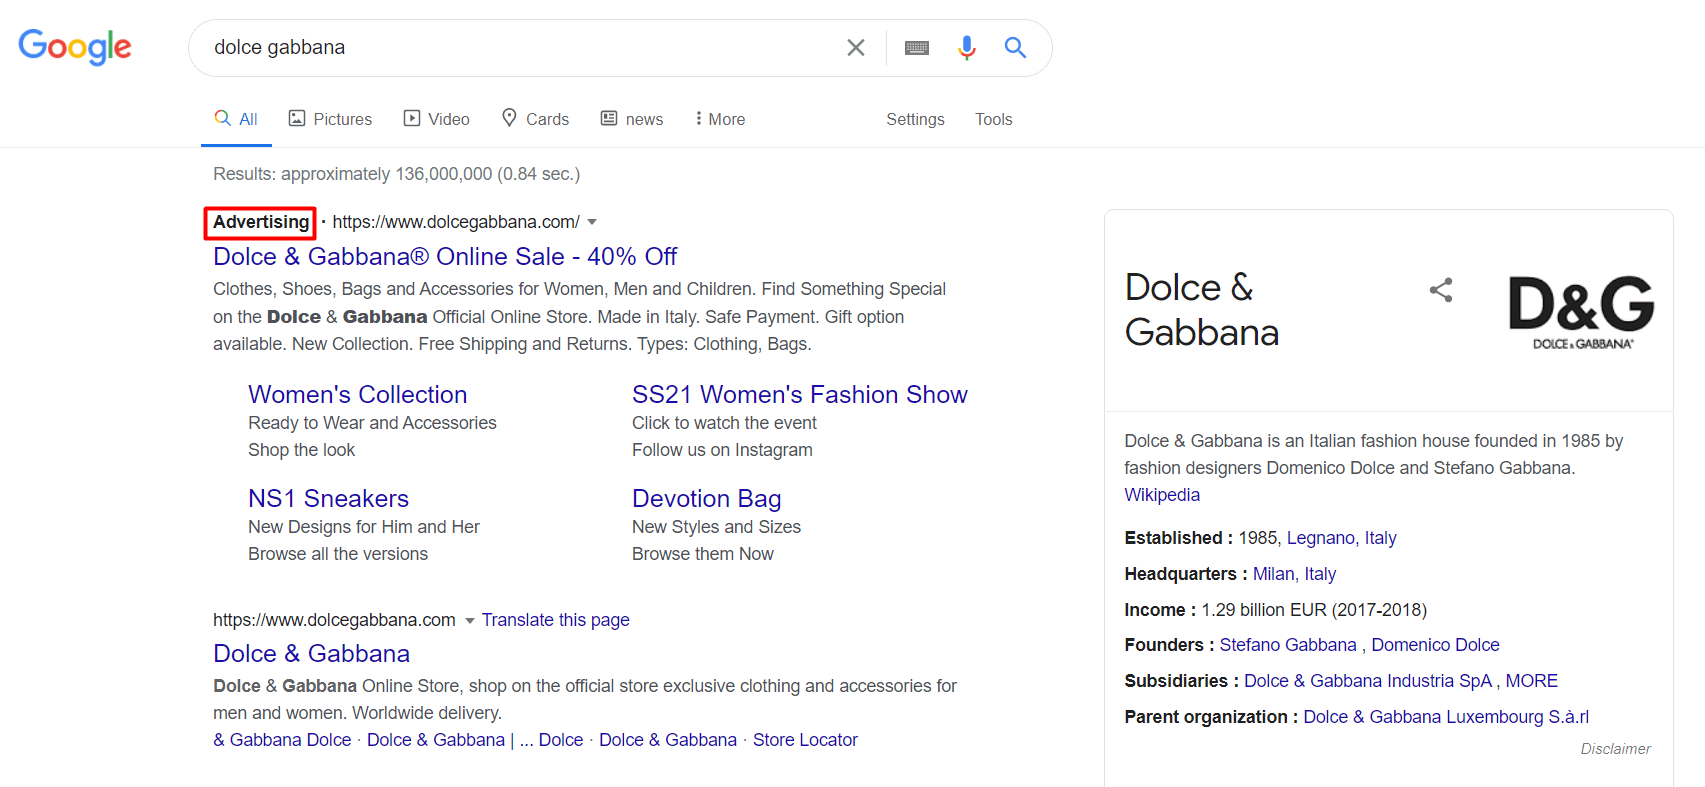 google ads example